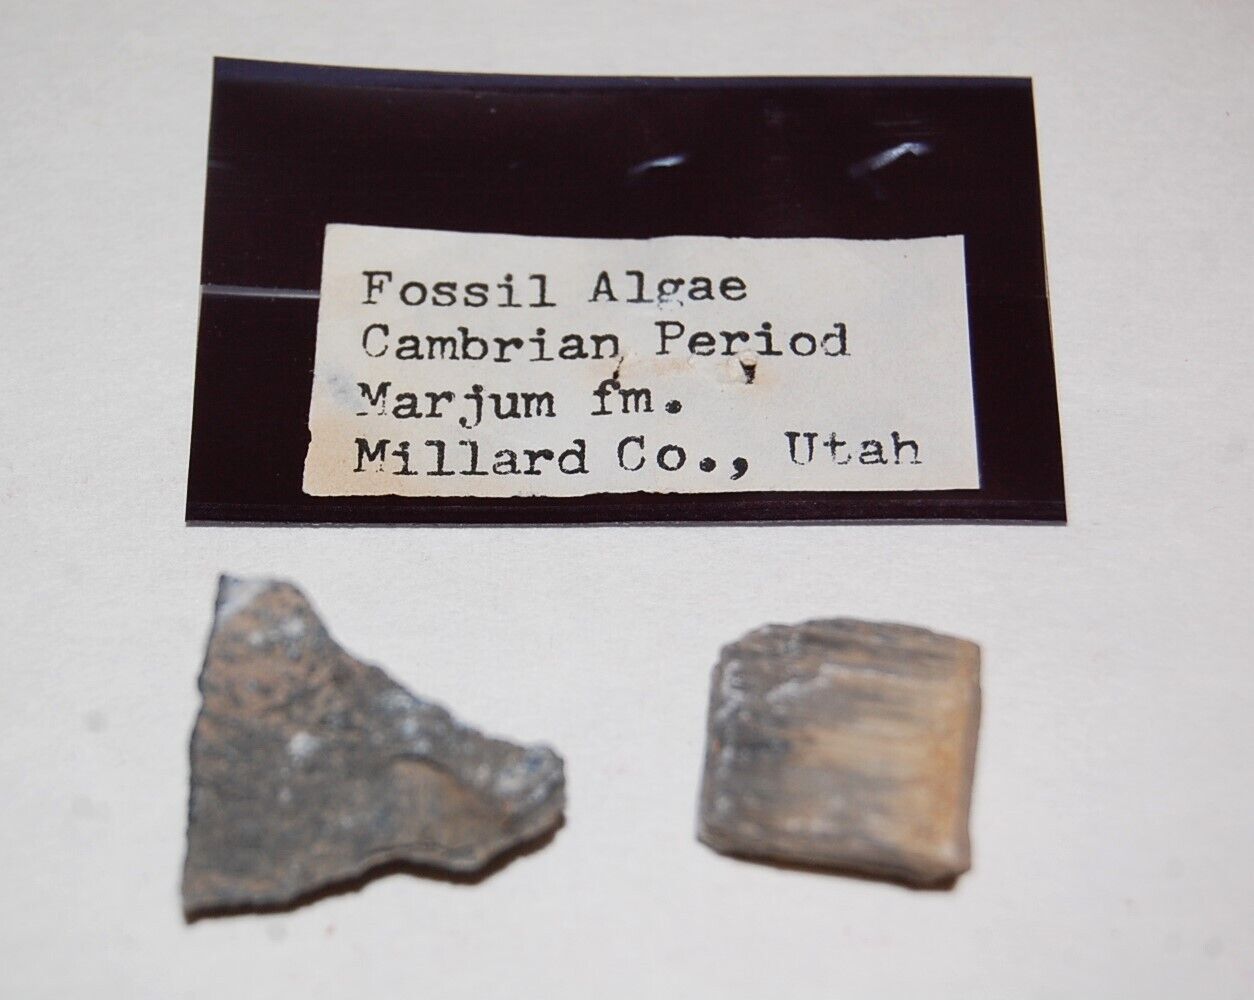 Fossil Algae, Cambrian Period, from Marjum formation in Millard Co., Utah